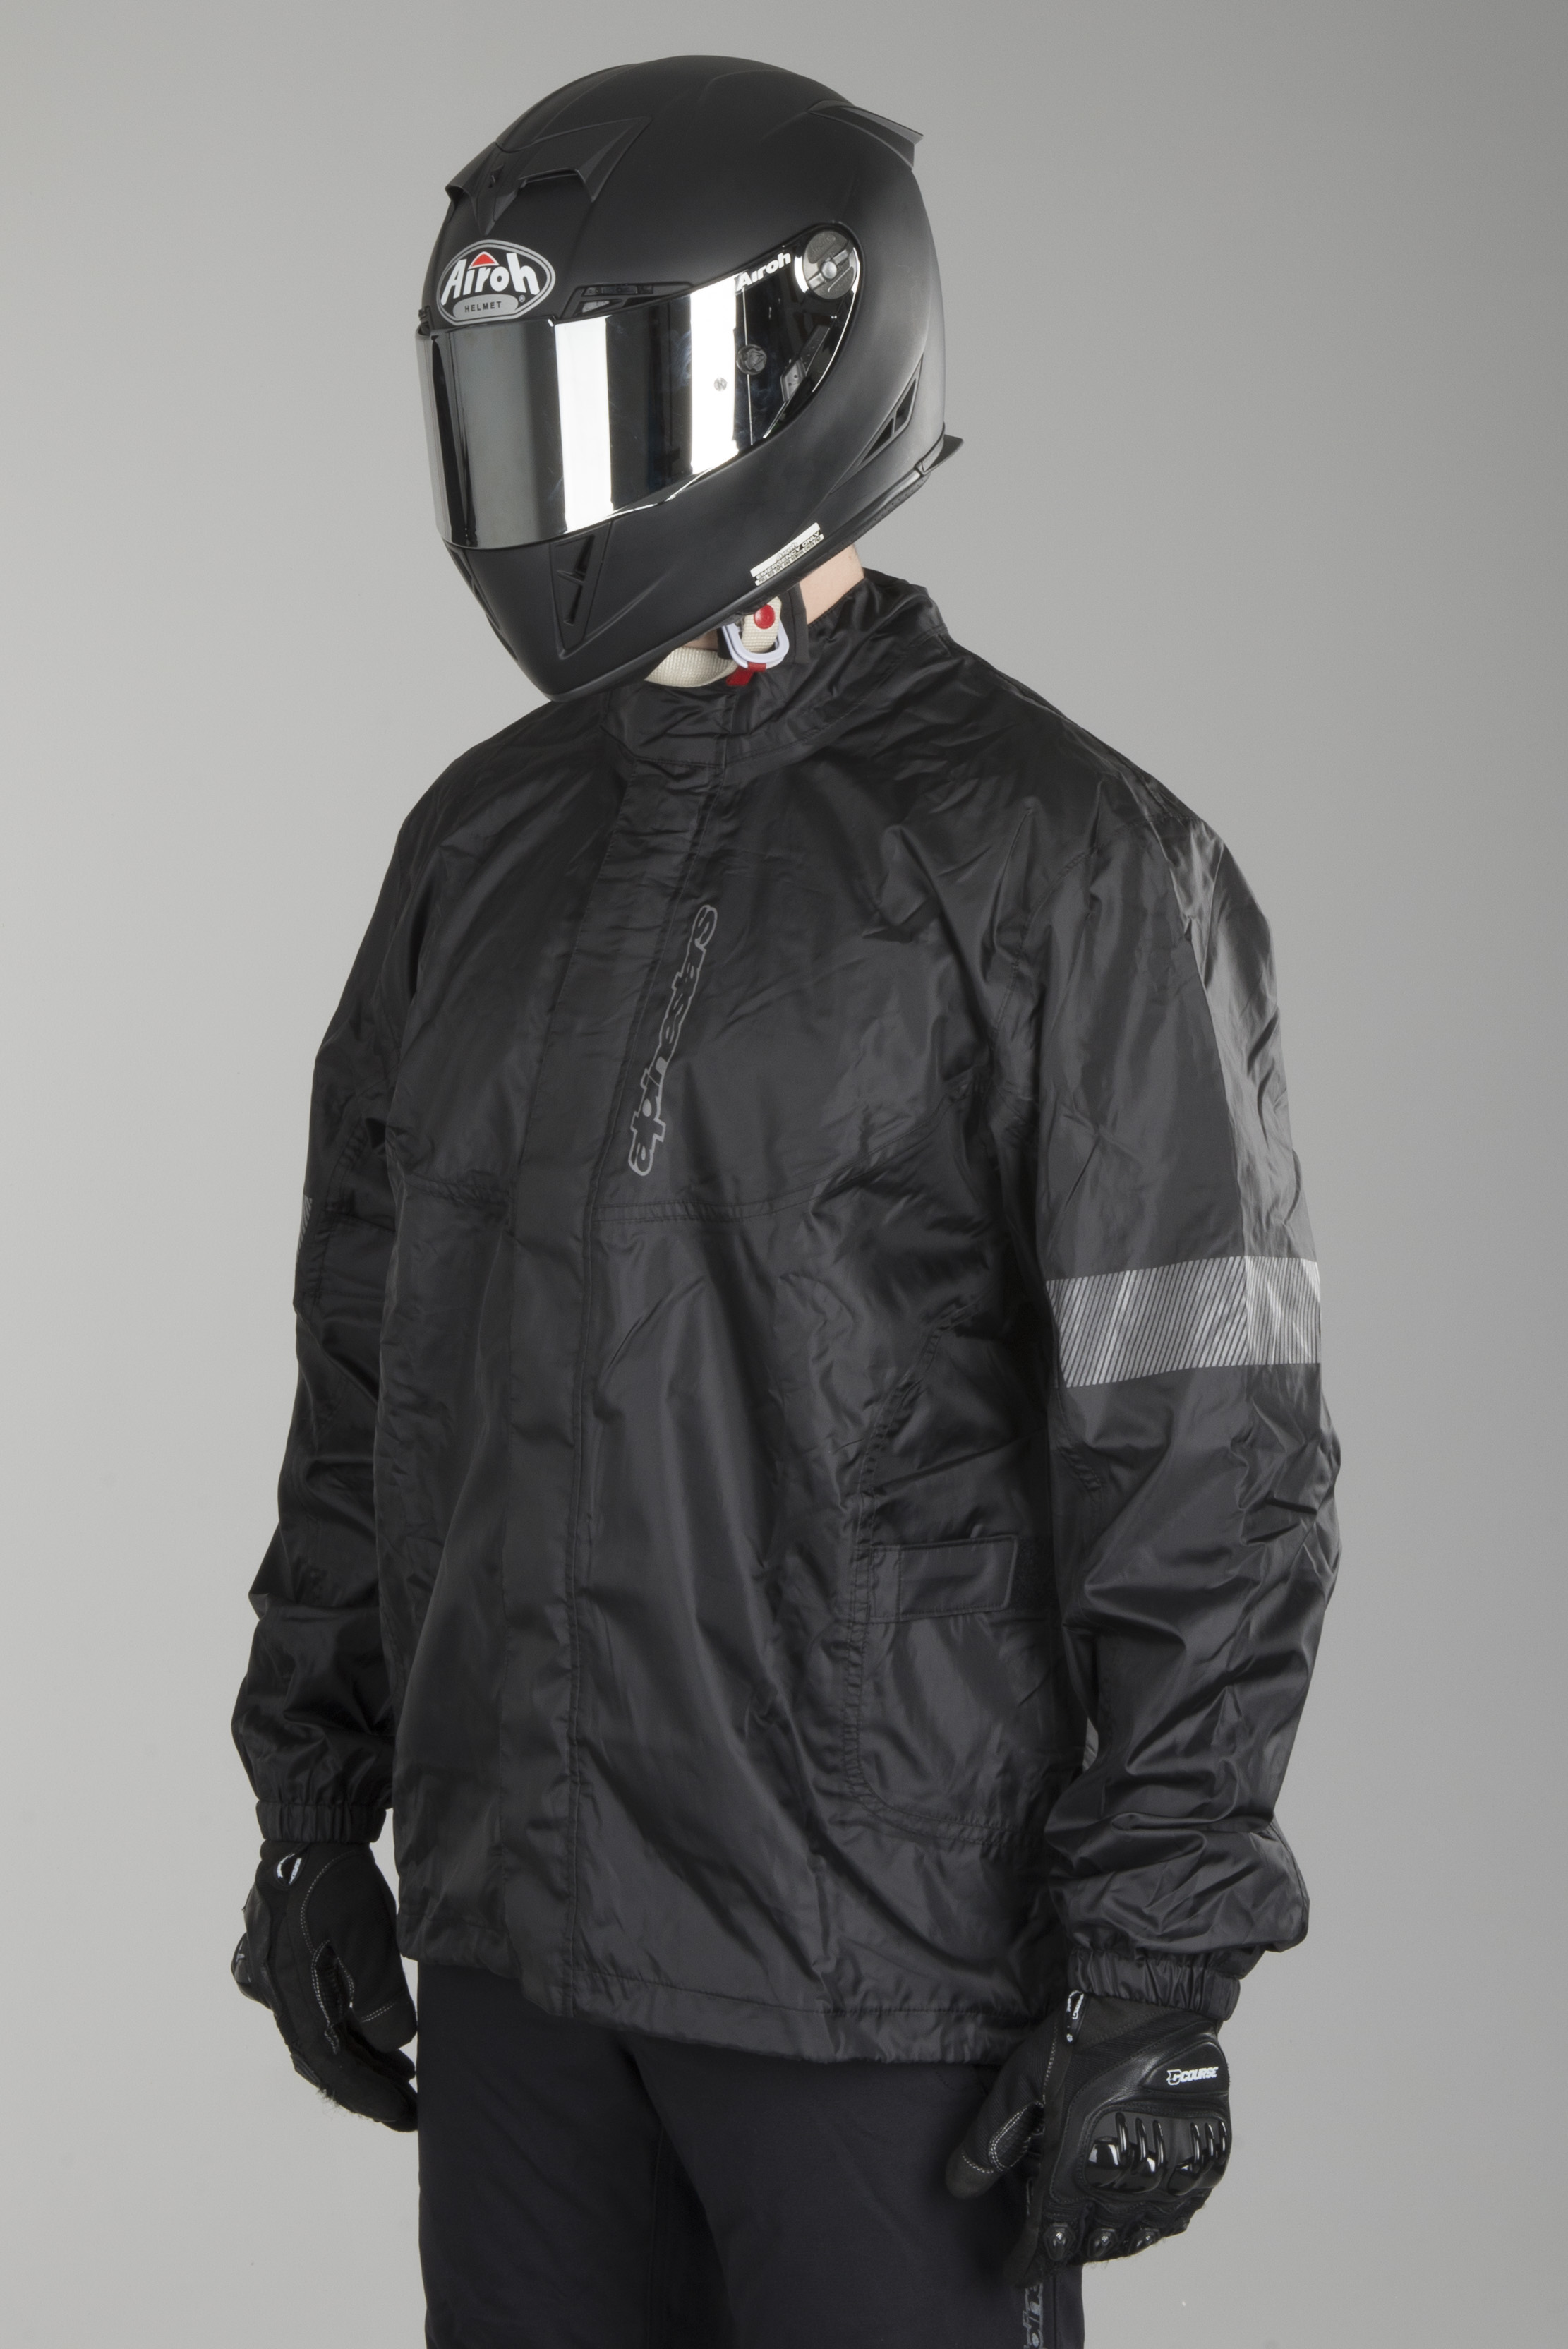 Hurricane Rain Jacket OR Pants Alpinestars Waterproof jacket OR pants